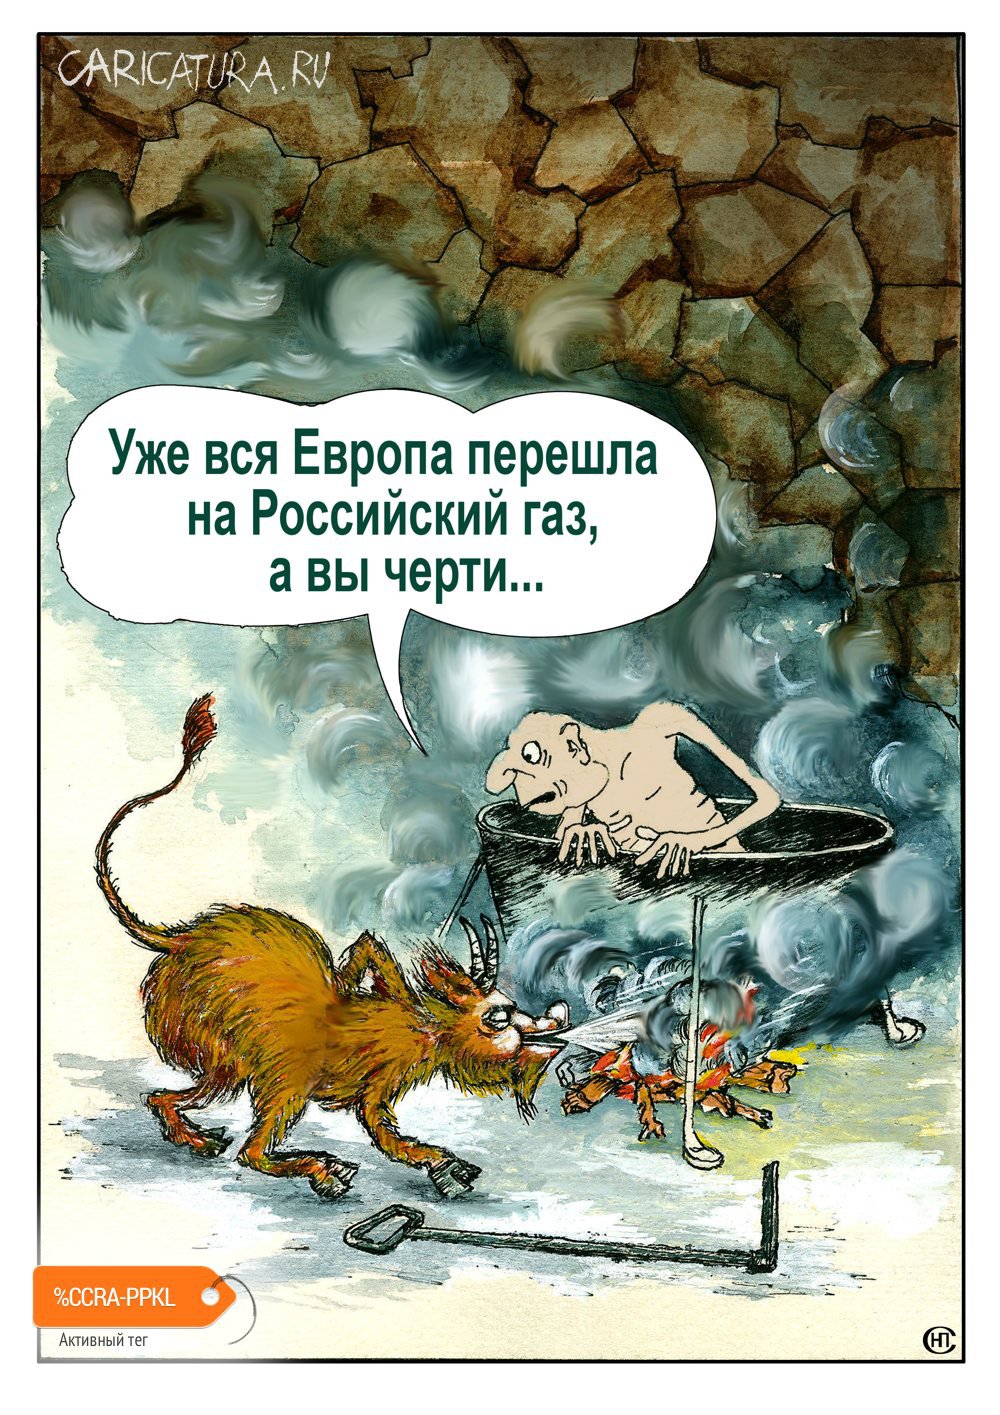 Карикатура "Черти", Николай Свириденко